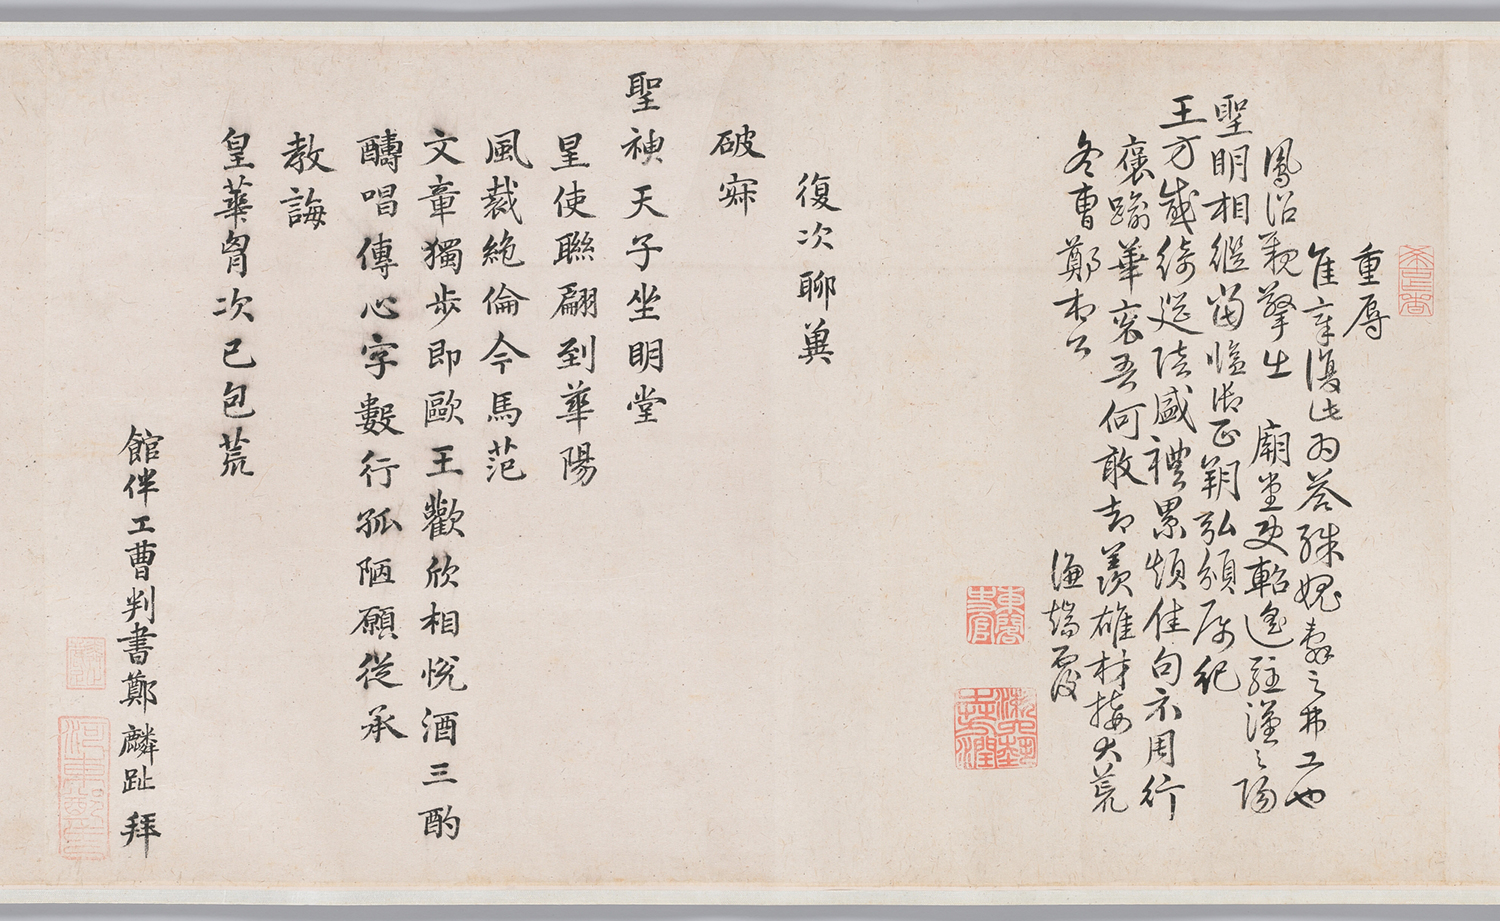 Poems by Ni Qian and Jeong Inji, Bongsa Joseon Changhwa Sigwon (Poetry Book Between Ming Envoys and Joseon Literati) (detail), 1450, Joseon Dynasty, Korea, ink on paper, 33 x 1600 cm (The National Museum of Korea, Treasure 1404)